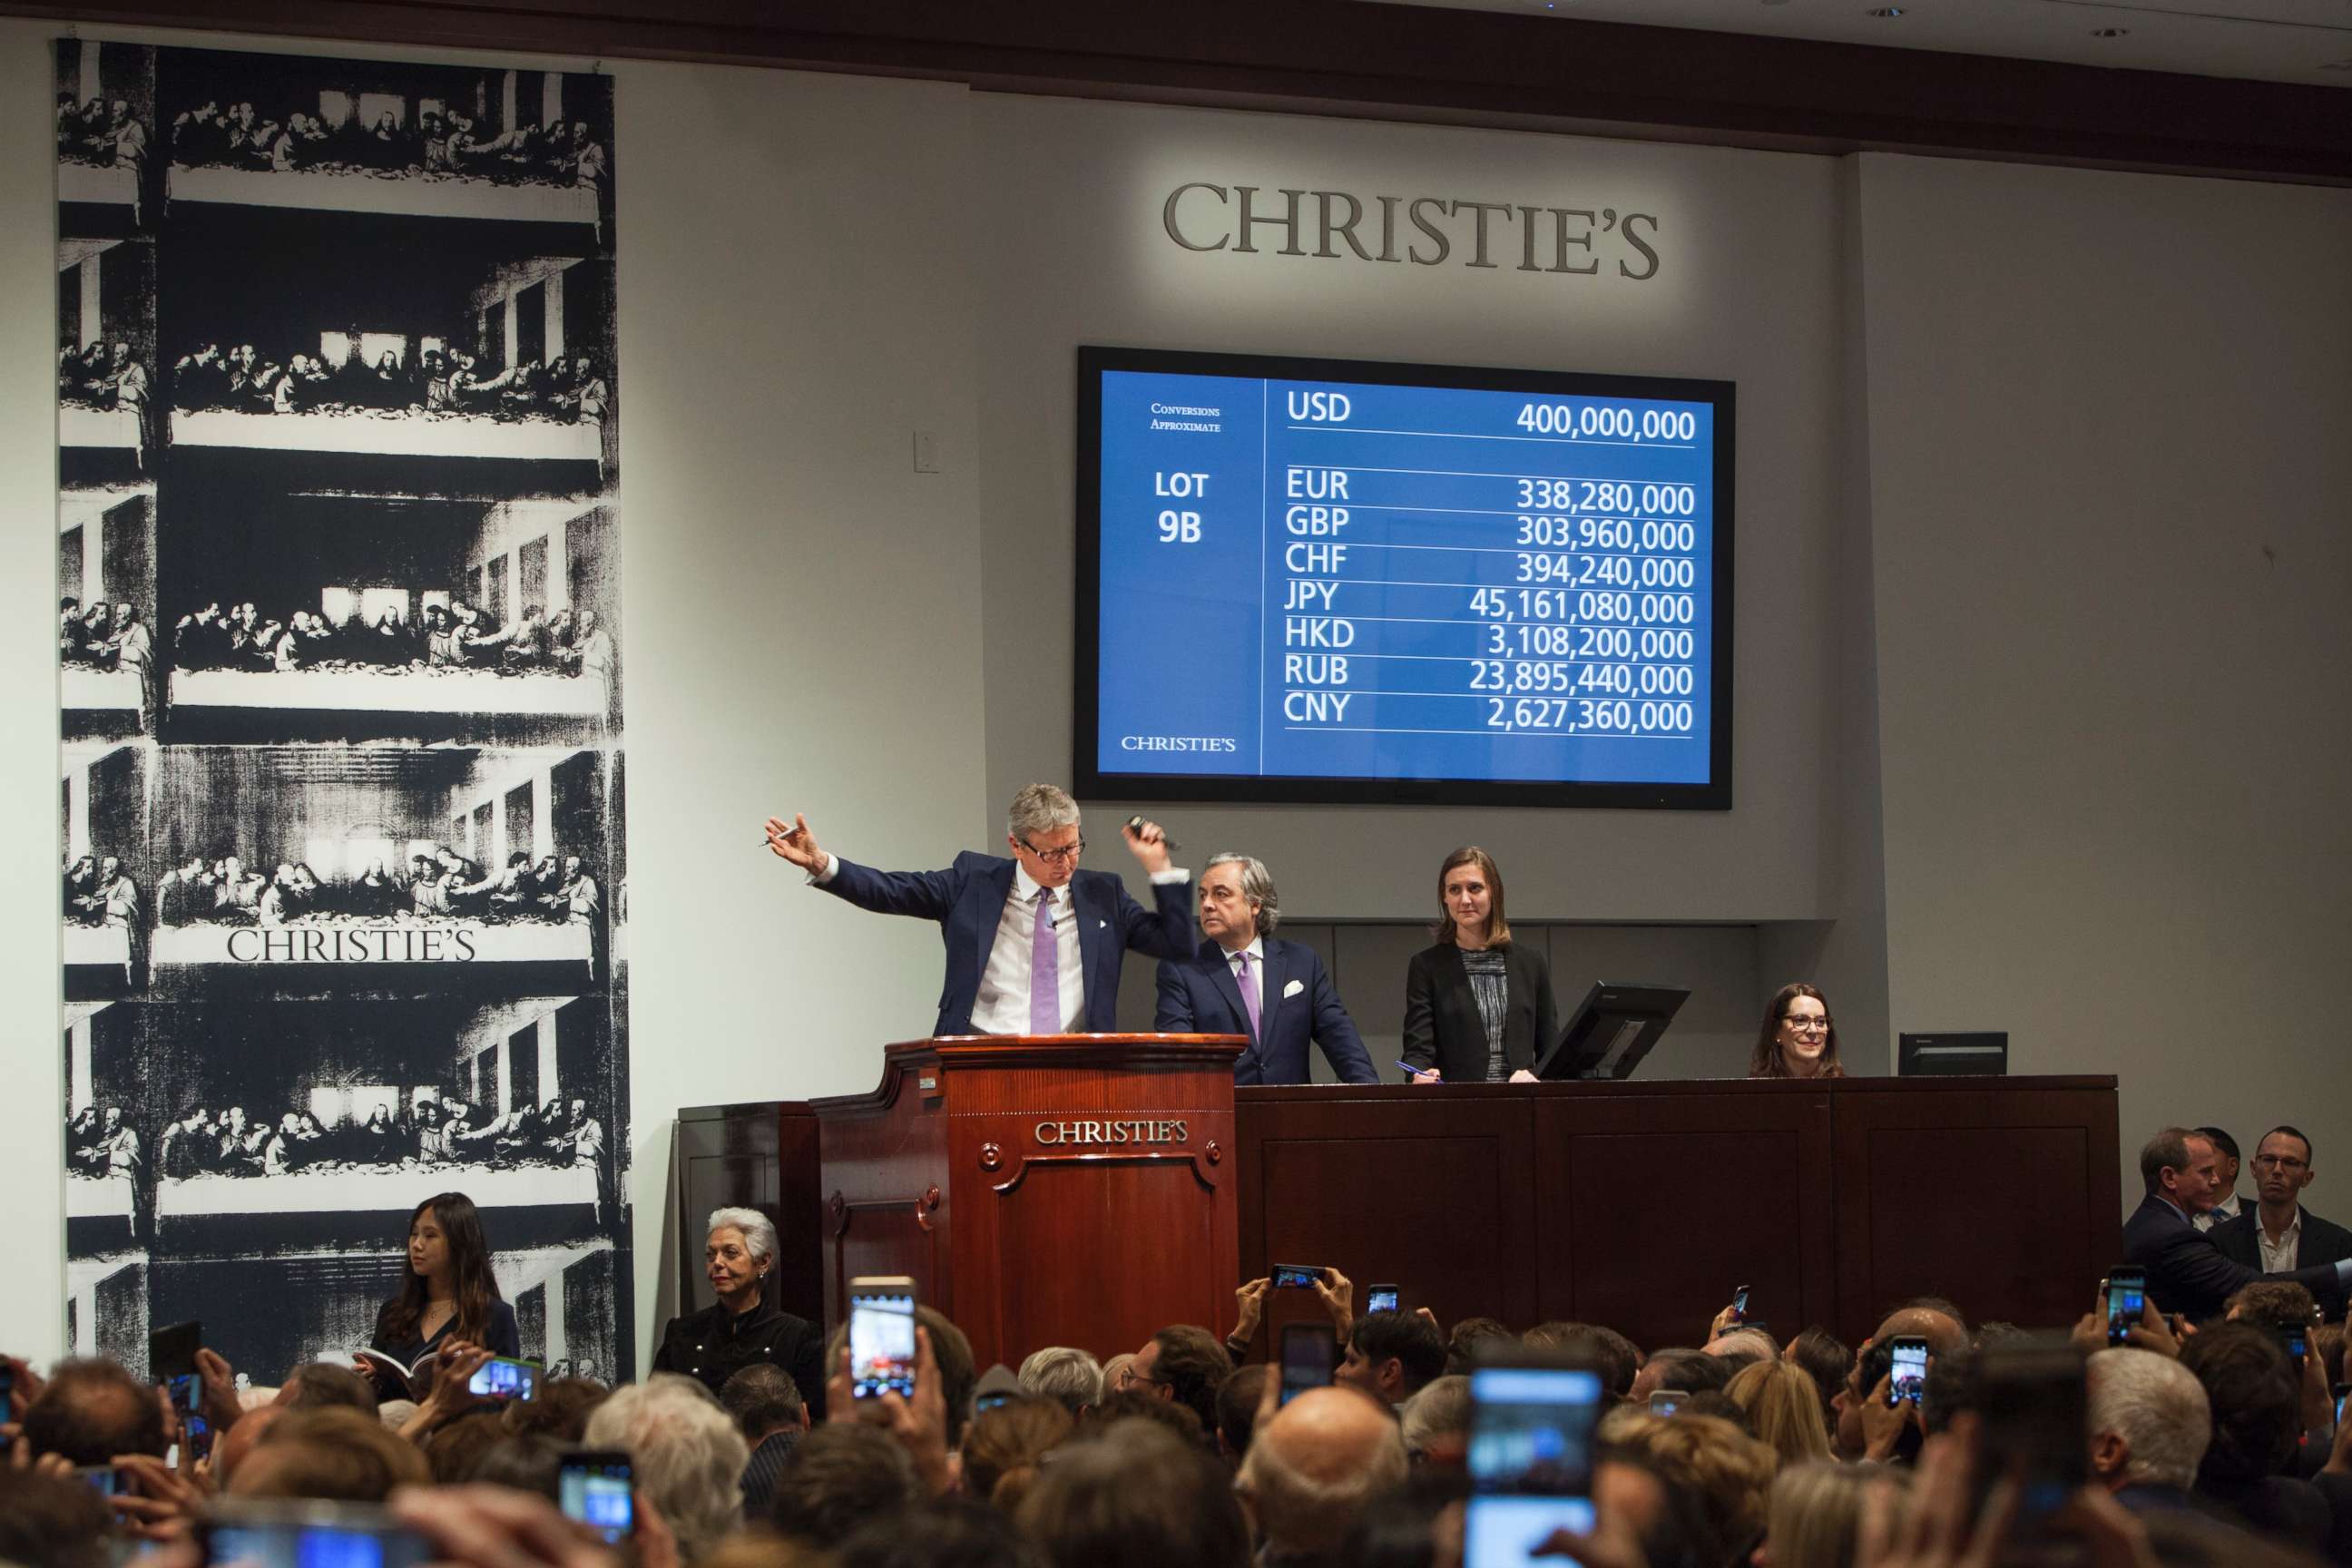 PHOTO: Auctioneer and Global President Jussi Pylkkanen is selling Leonardo da Vinci's Salvator Mundi (Savior of the World) painting for $450,312,500 at Christie's, Nov. 15, 2017, in New York City.